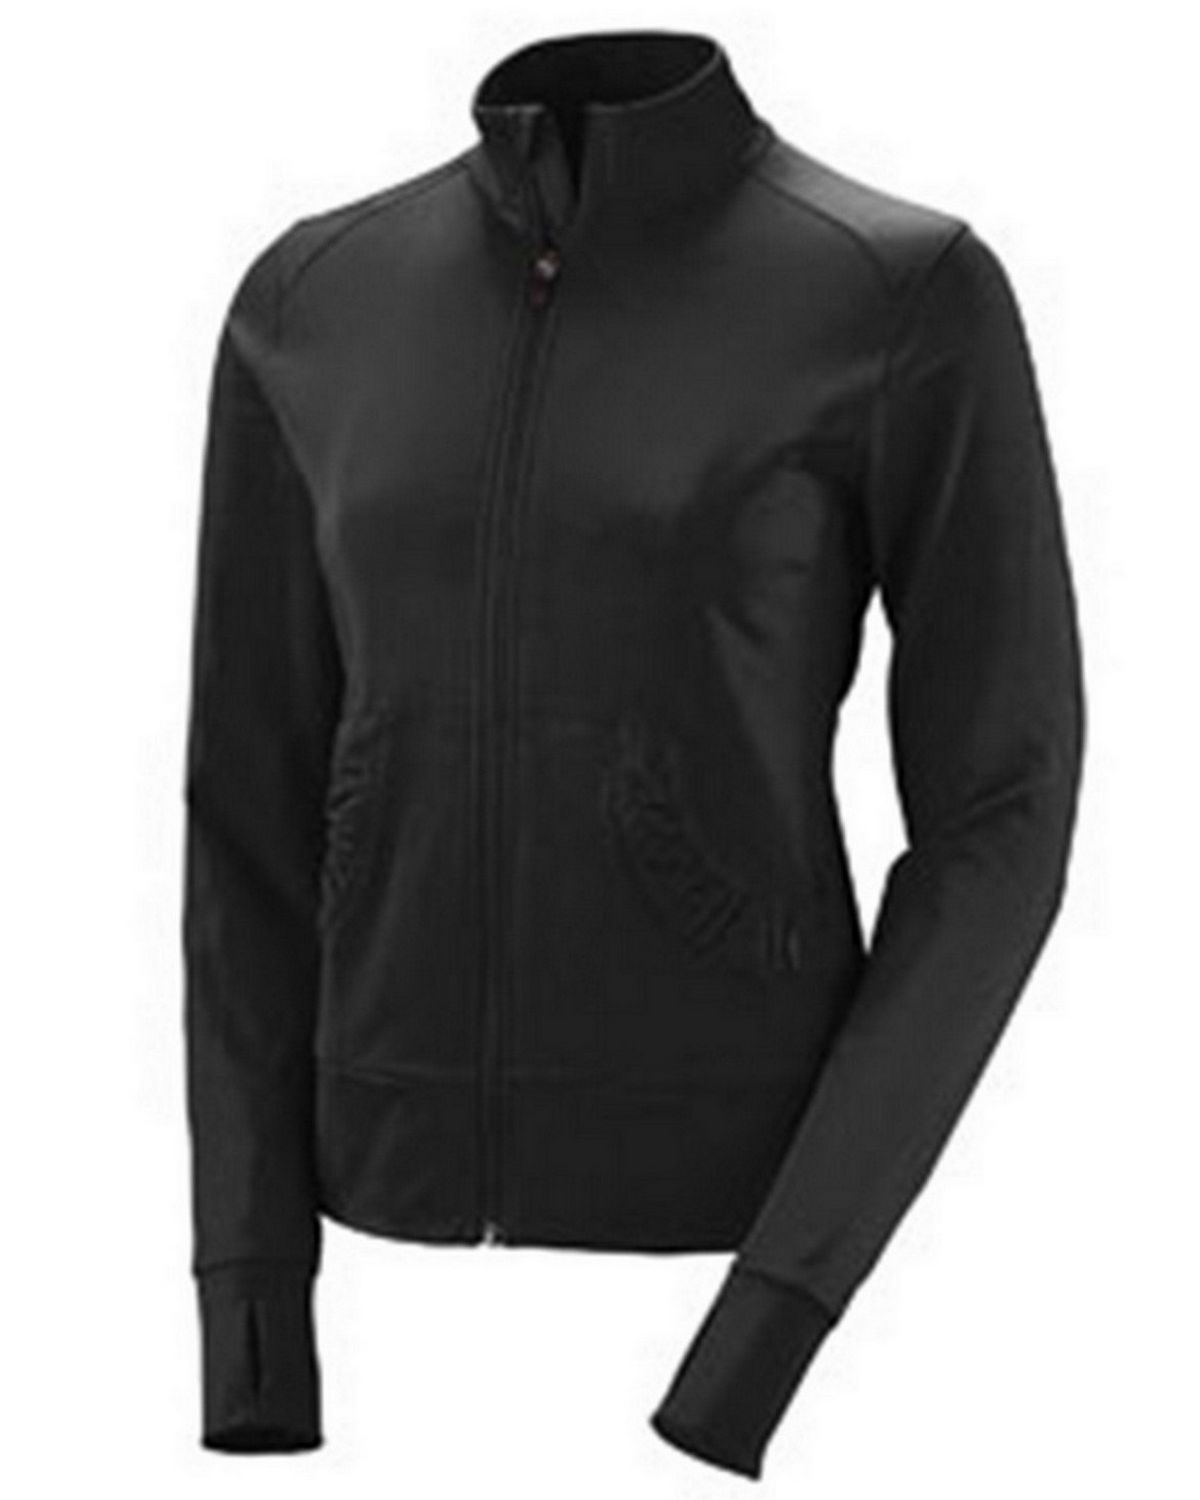 Augusta Sportswear 4816 Women's Arabesque Jacket